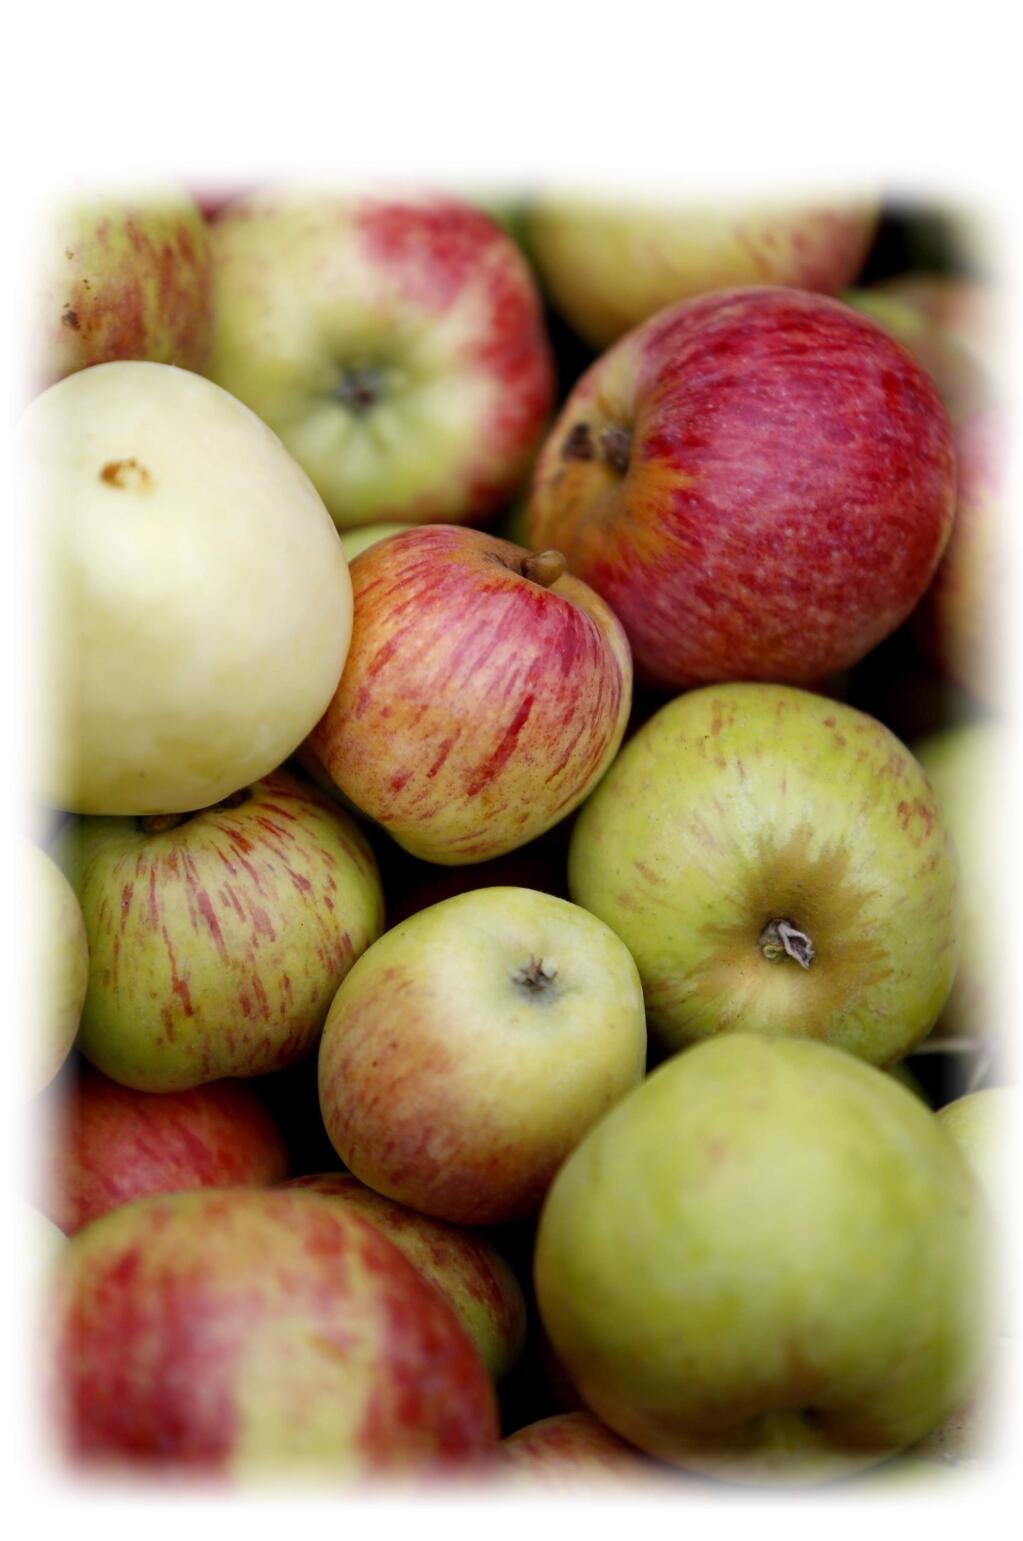 Gravenstein apples at an orchard in Sebastopol, on Thursday, July 23, 2015 .(BETH SCHLANKER/ The Press Democrat)